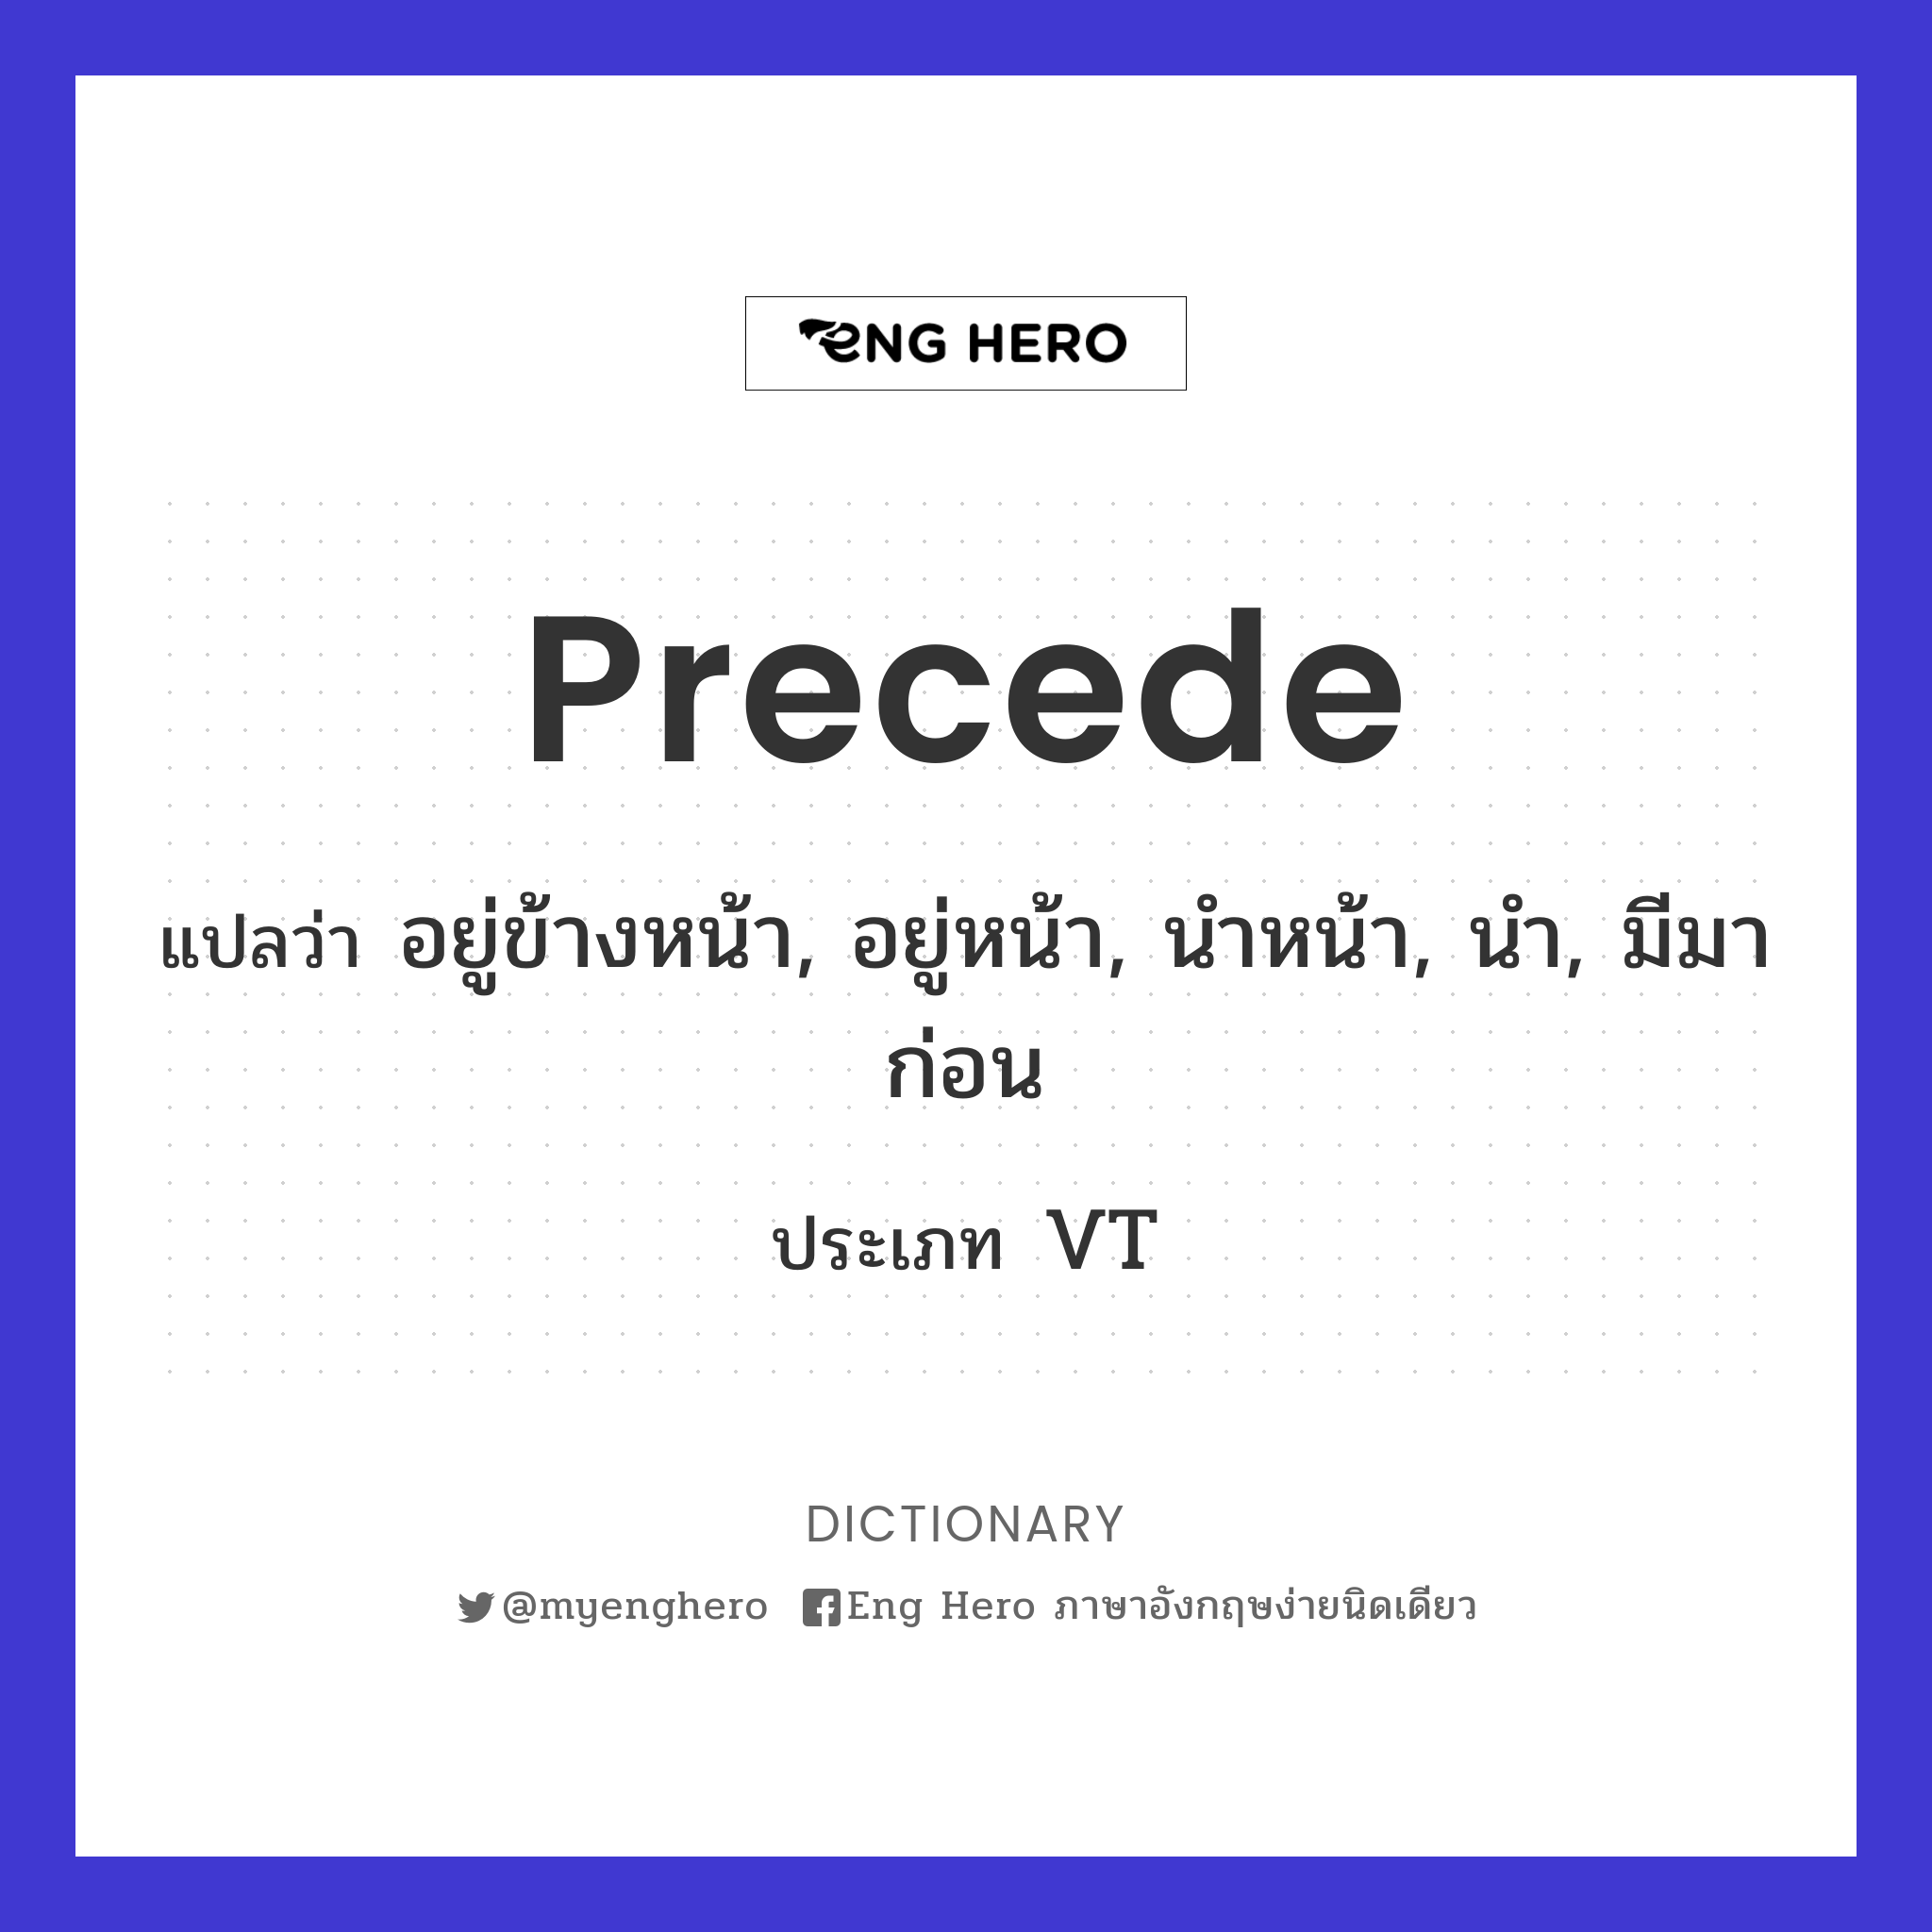 precede